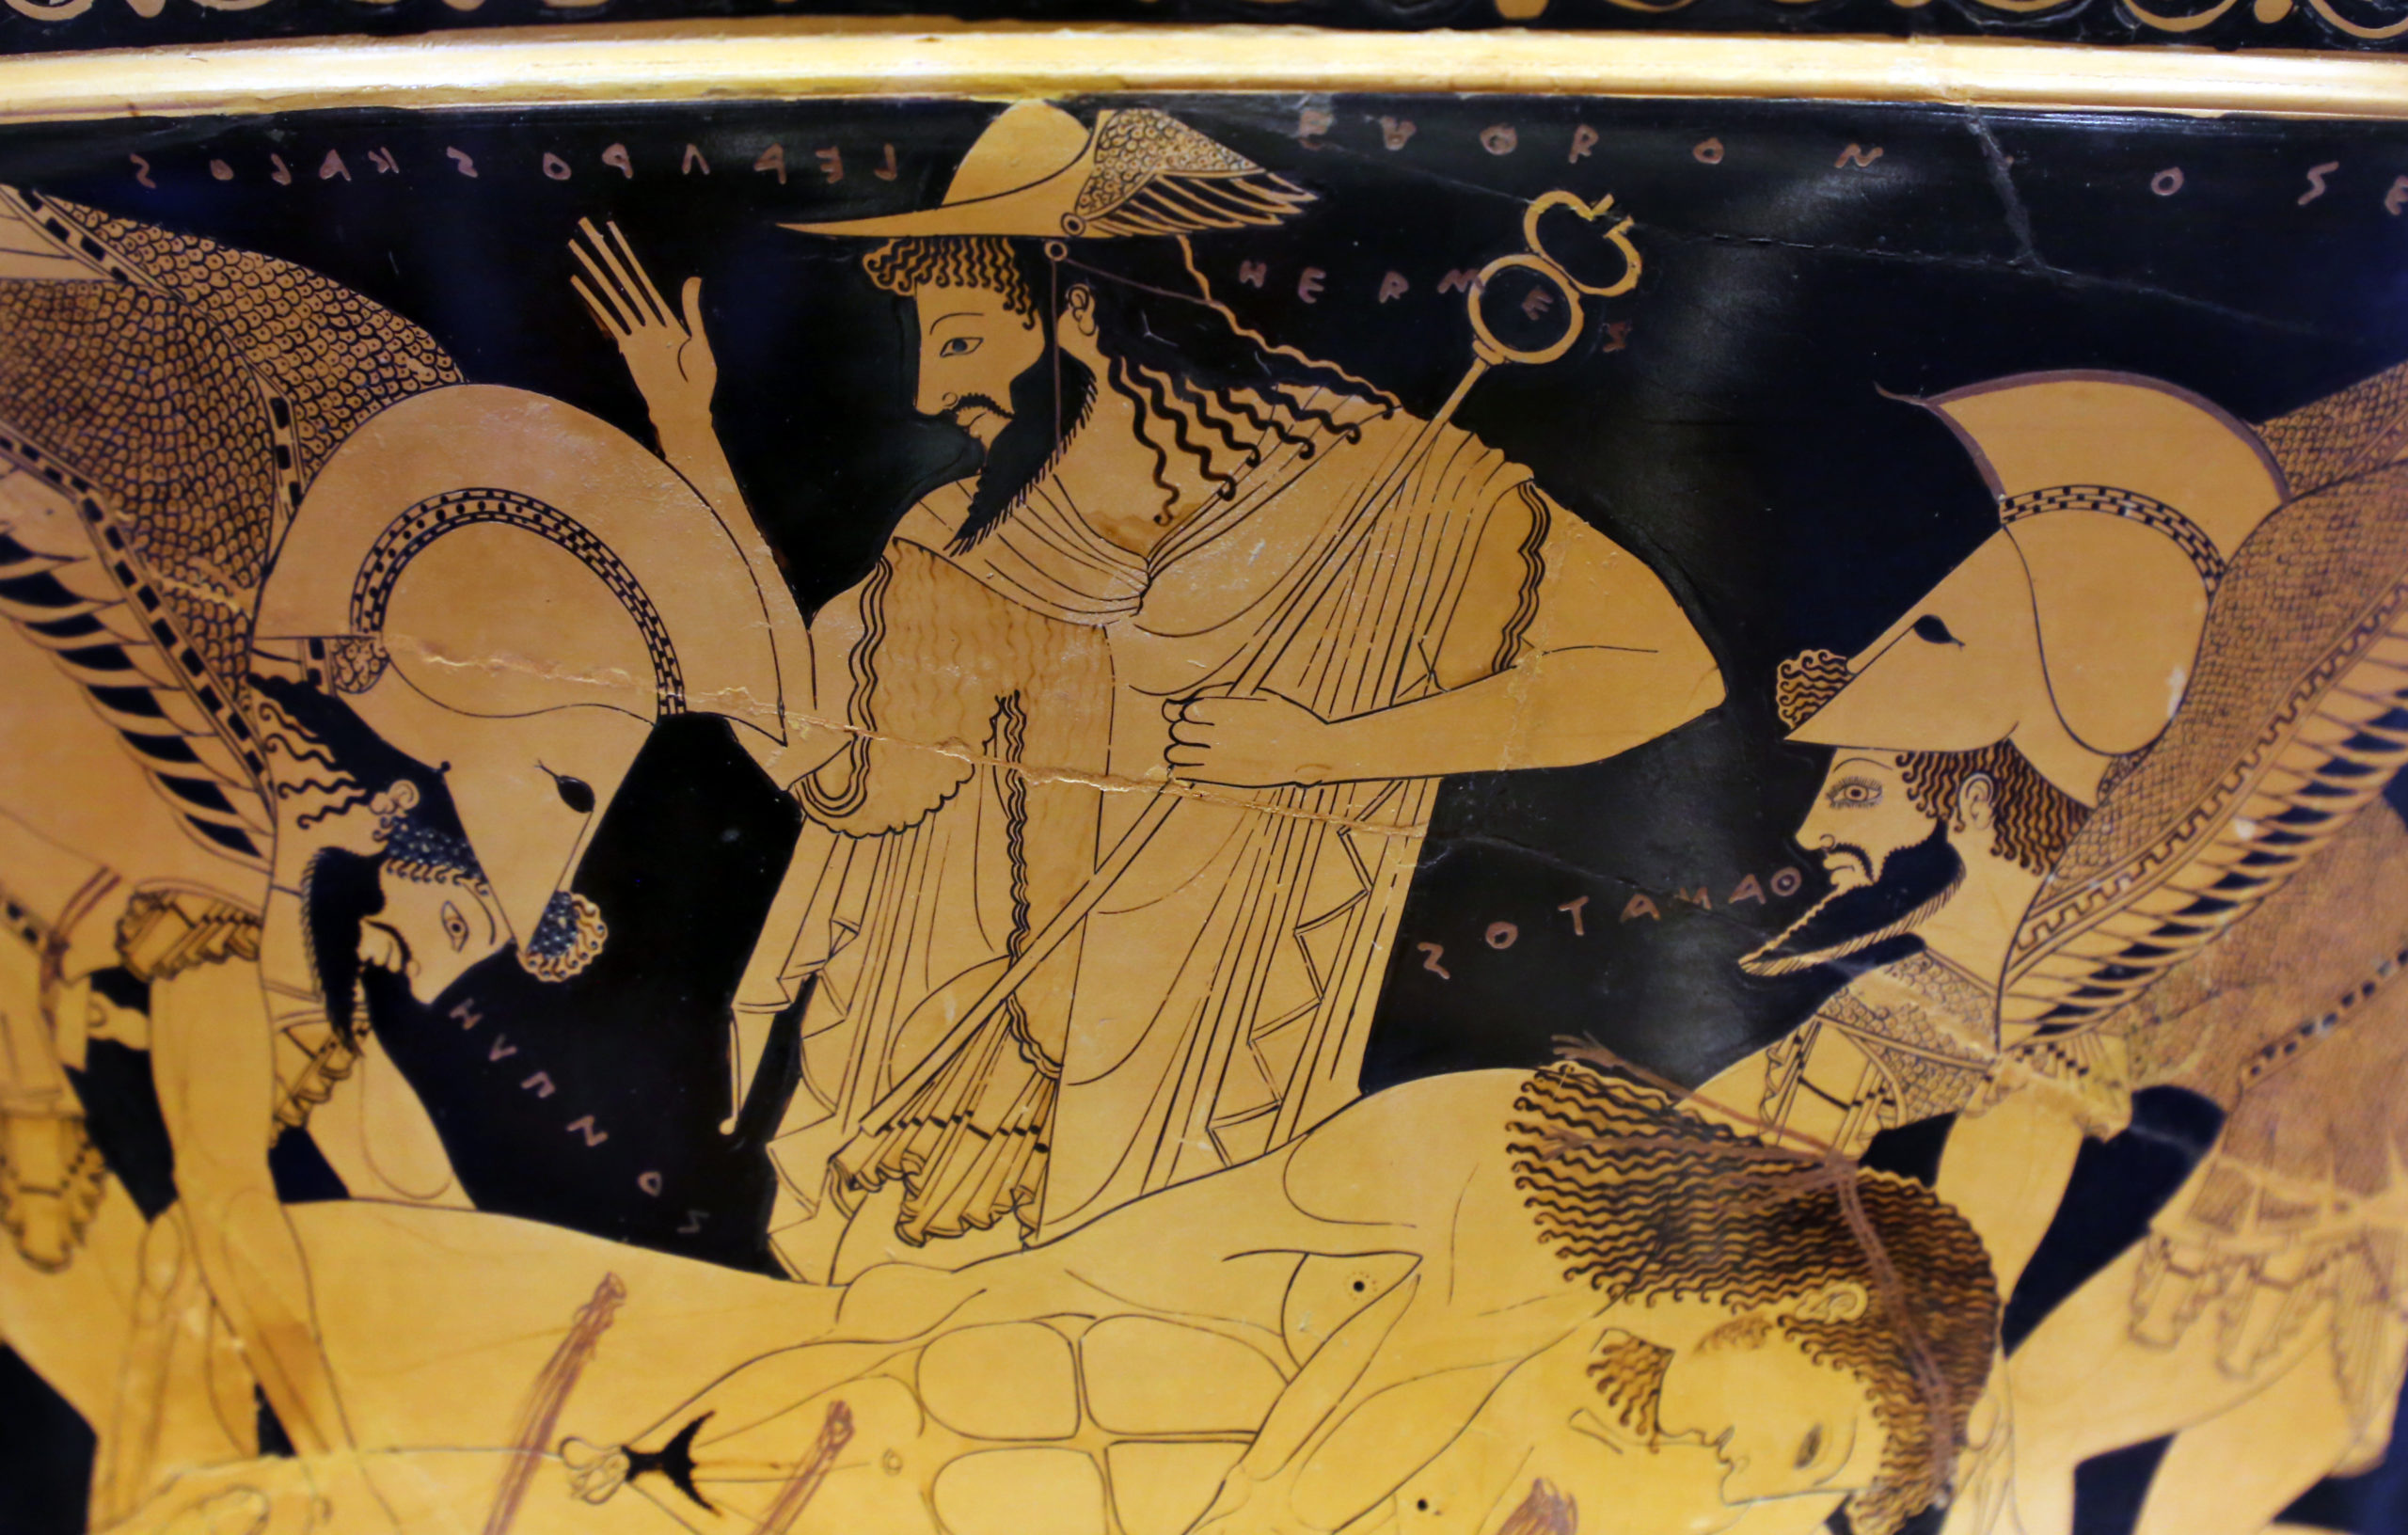 Euphronios, Sarpedon Krater, (signed by Euxitheos as potter and Euphronios as painter), detail showing Hermes, c. 515 B.C.E., red-figure terracotta, 55.1 cm diameter (National Museum Cerite, Cerveteri, Italy, photo: Sailko,, CC BY 3.0)